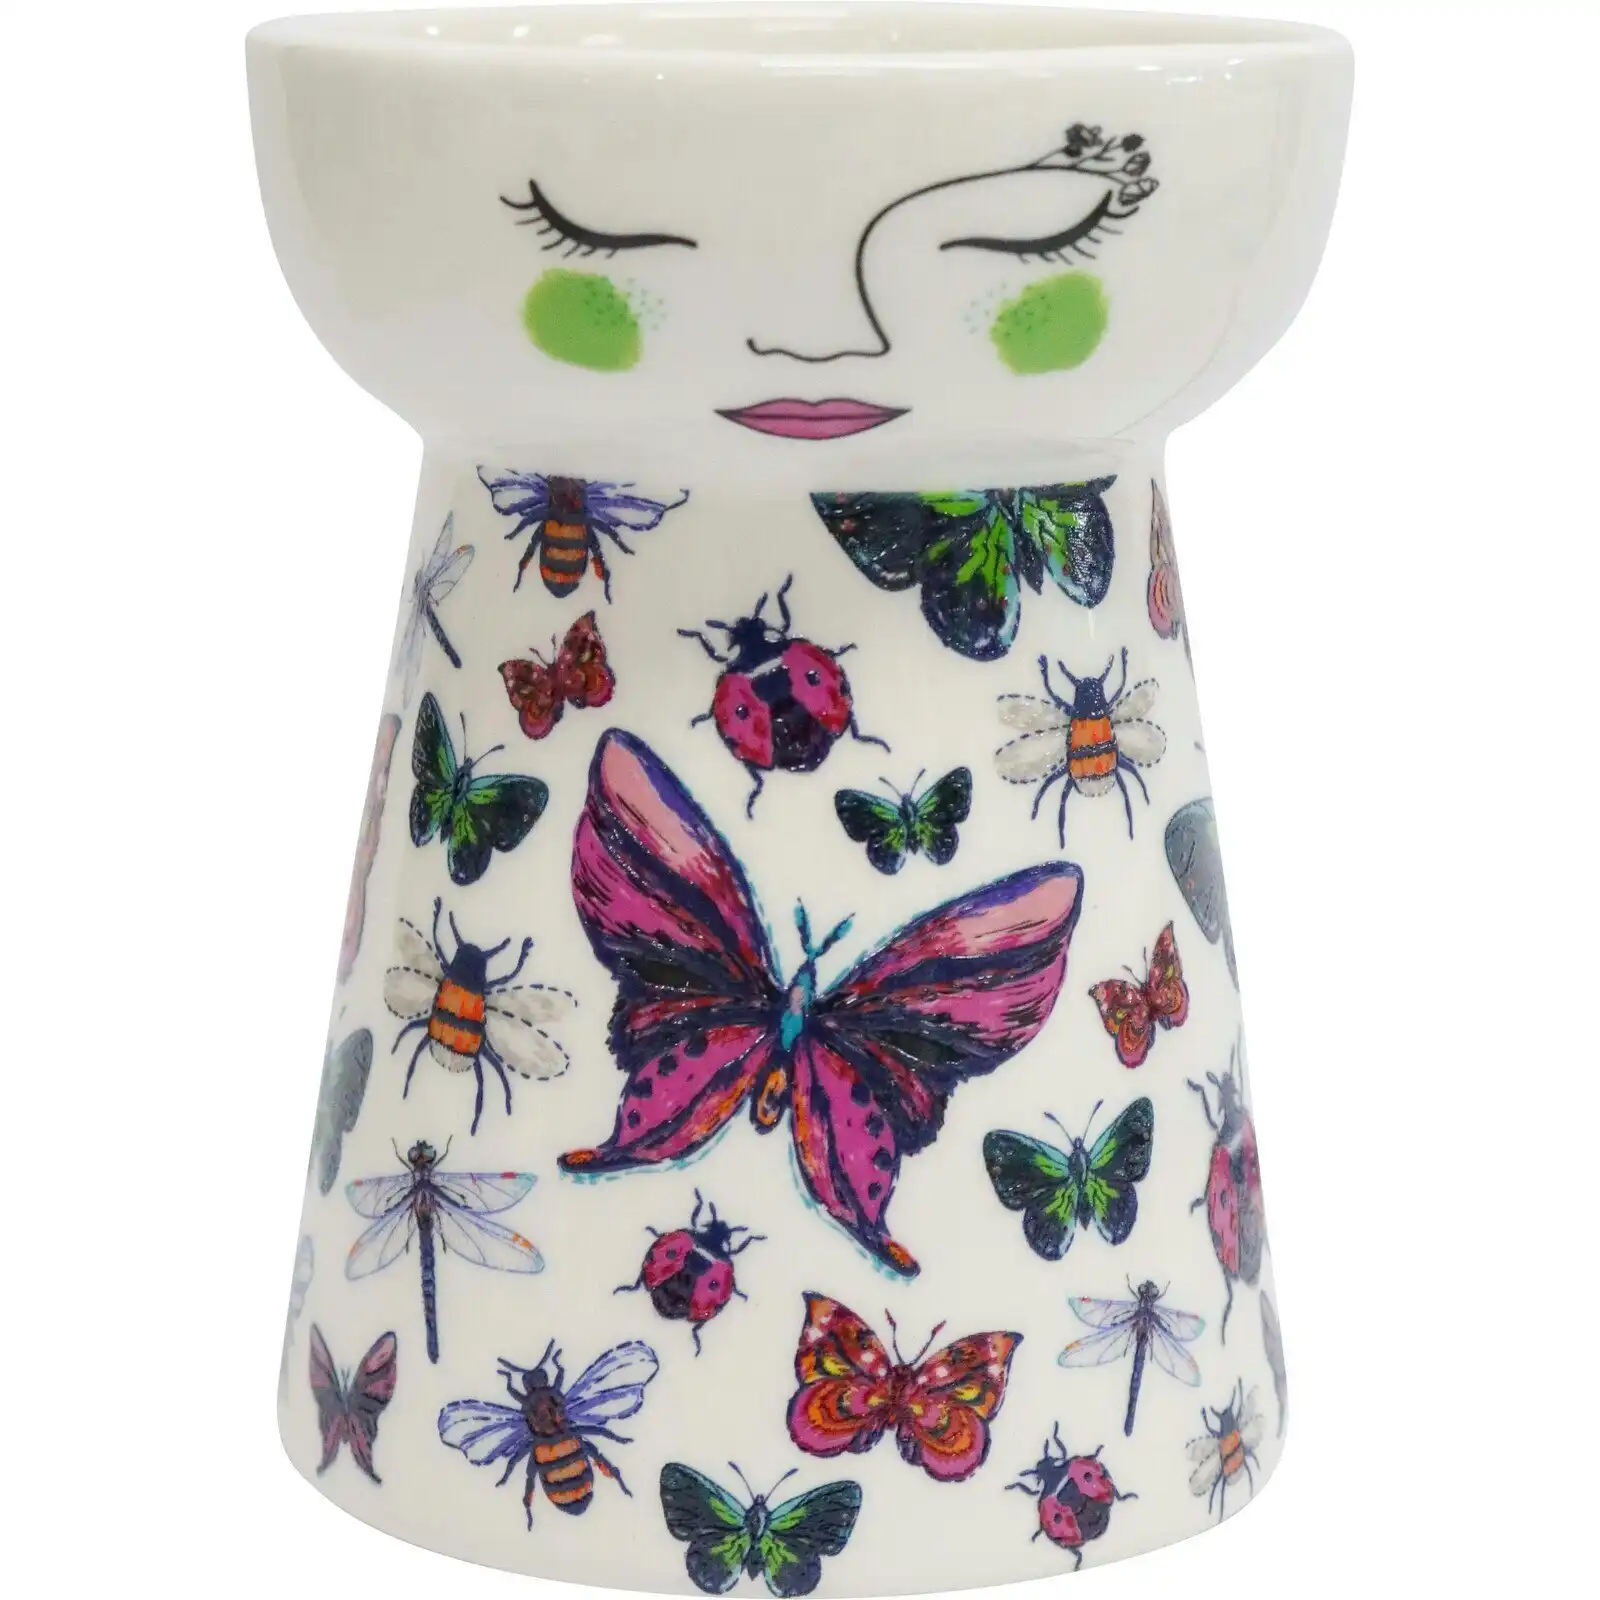 LVD Ceramic Doll Vase Pot Home/Office Tabletop Decor Display 11.5cm Butterfly